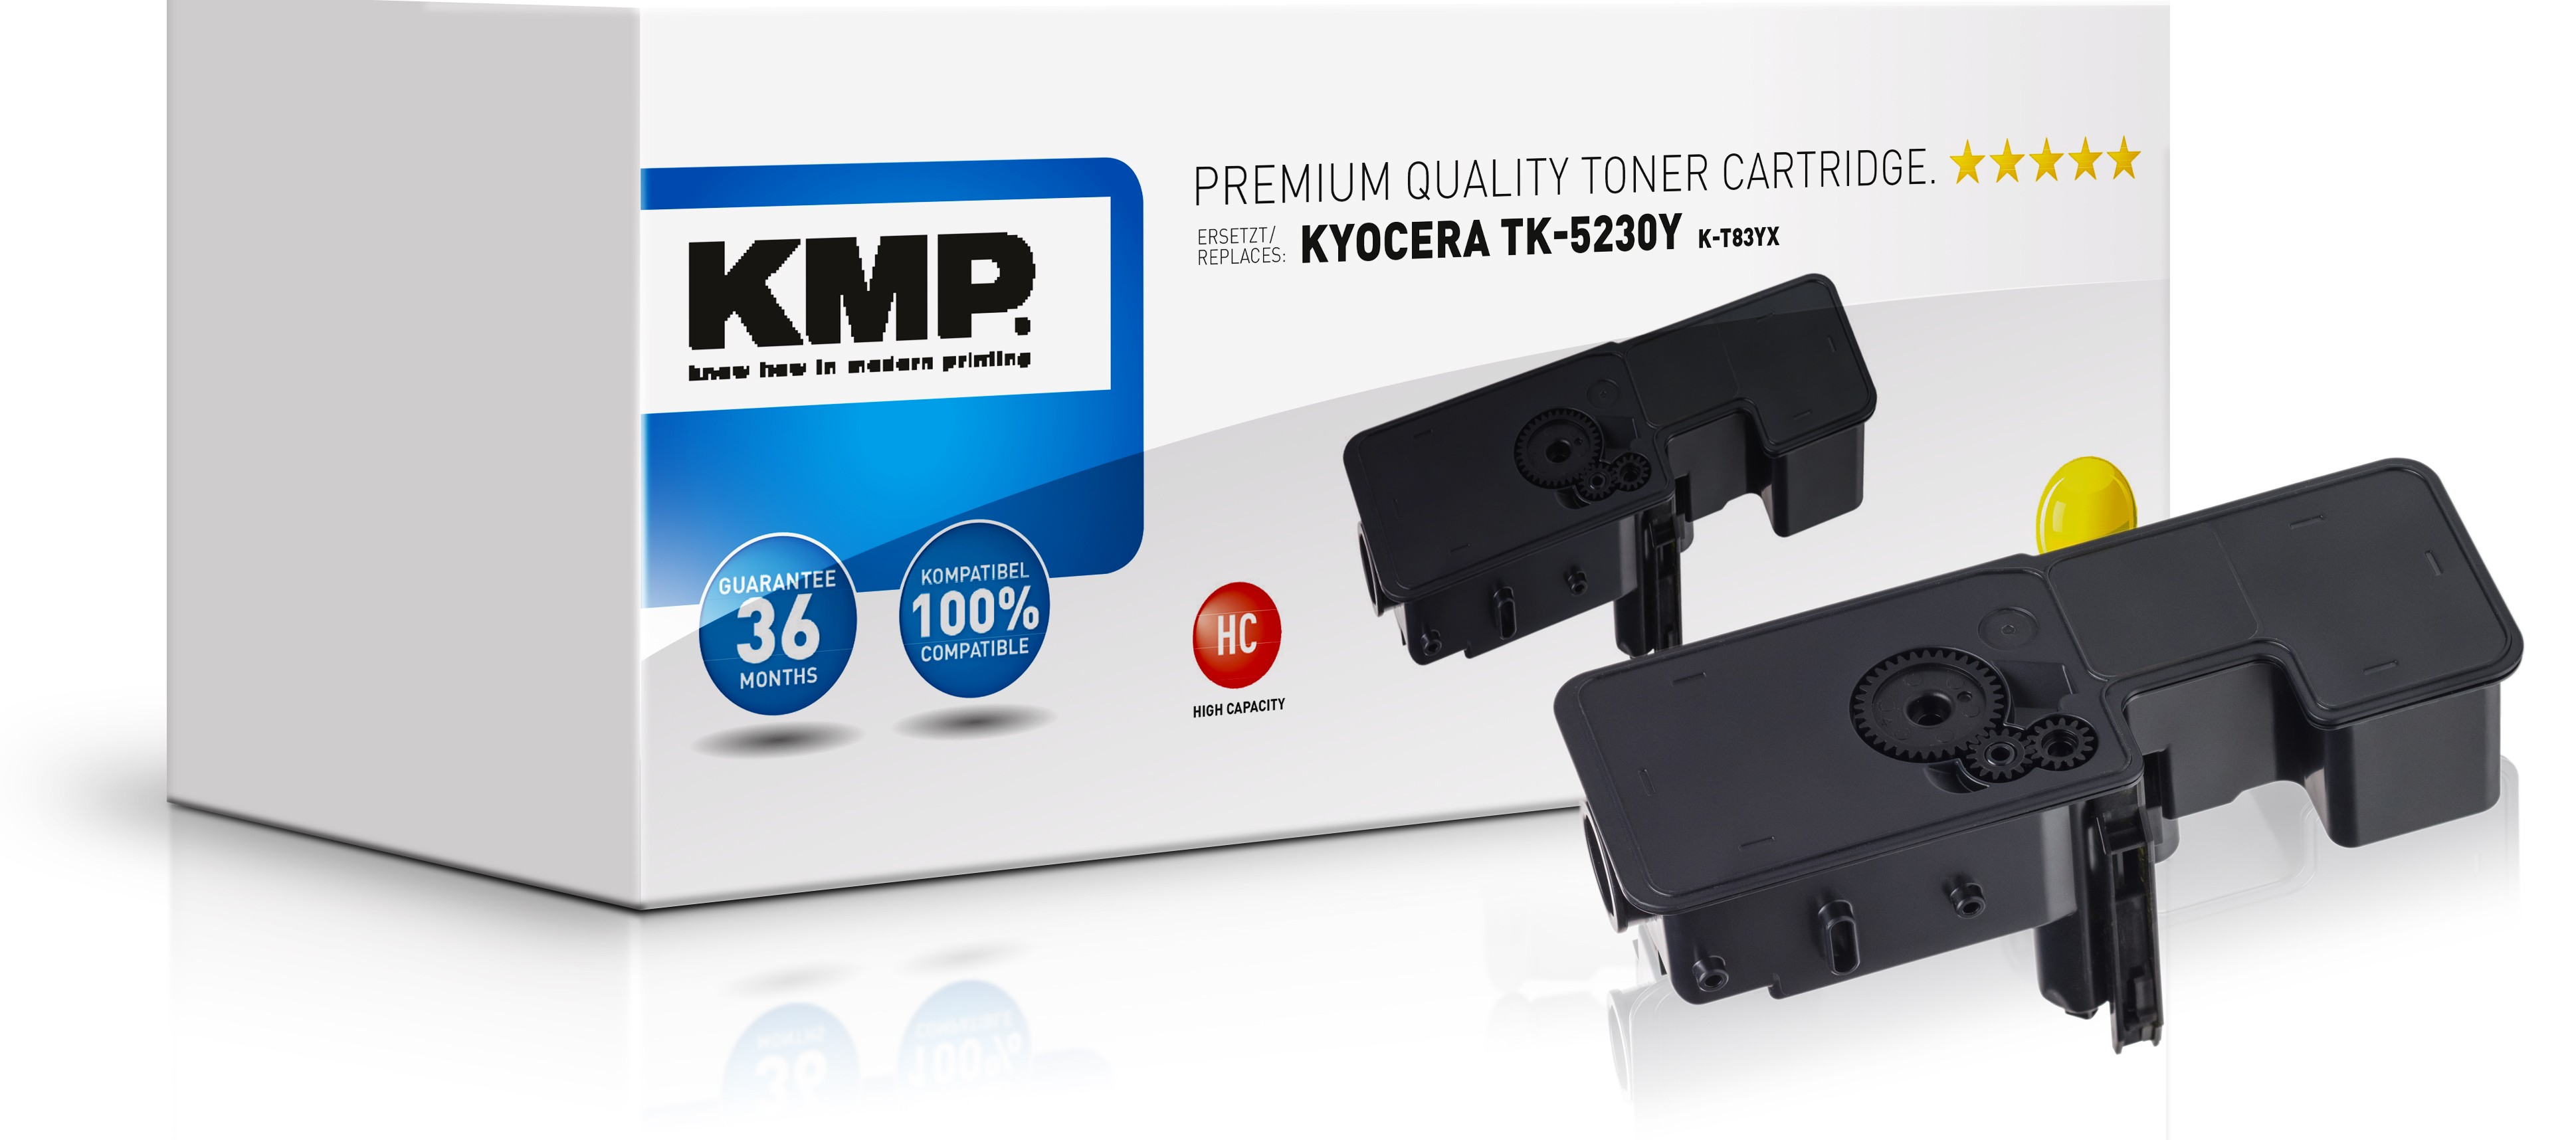 KMP K-T83YX - 2200 Seiten - Gelb - 1 Stück(e)